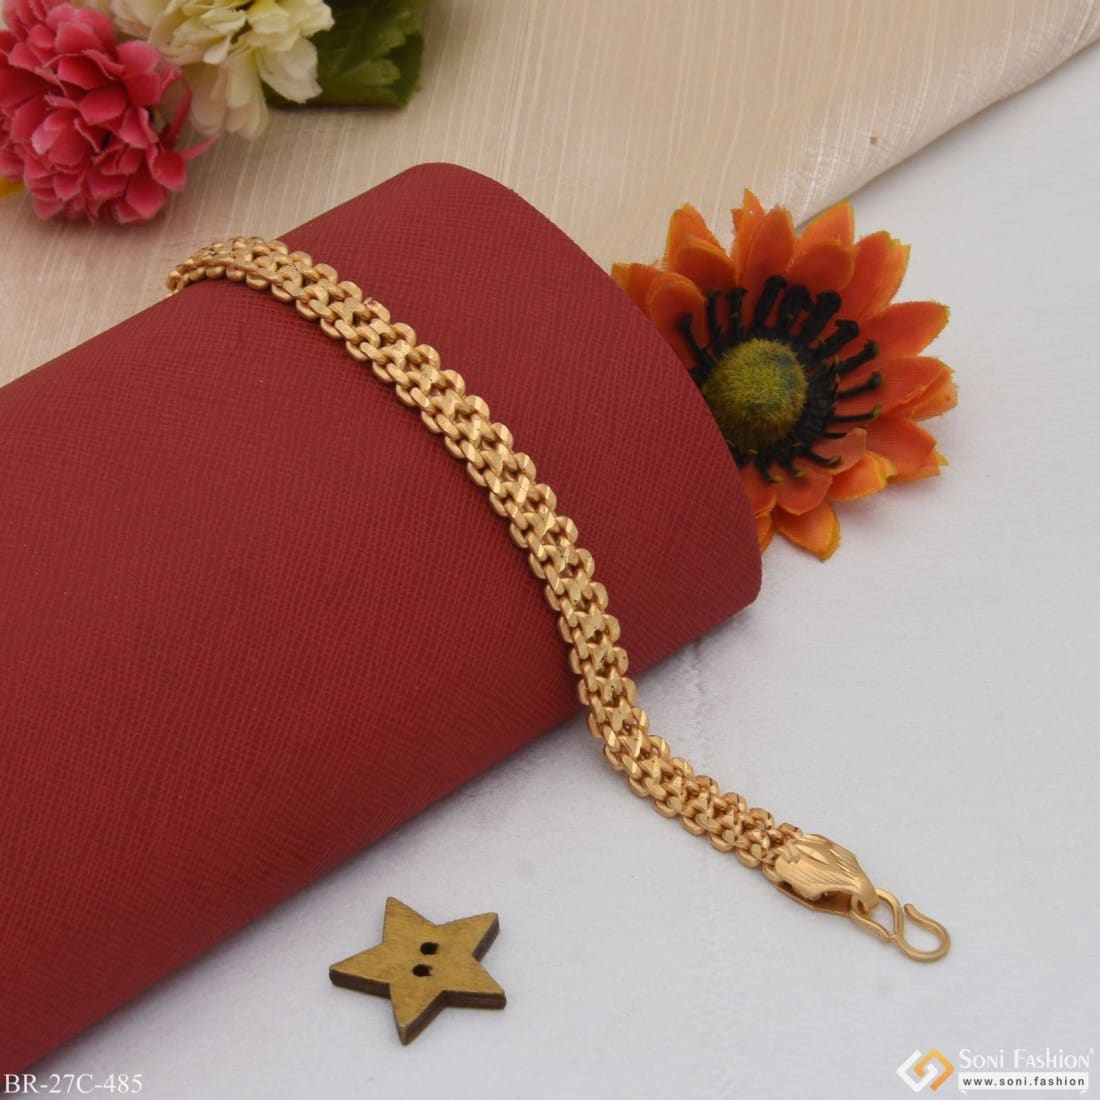 1 Gram Gold Plated With Rudraksha Chic Design Bracelet For Ladies - Style  A293, गोल्ड प्लेटेड ब्रेसलेट - Soni Fashion, Rajkot | ID: 2852547055697